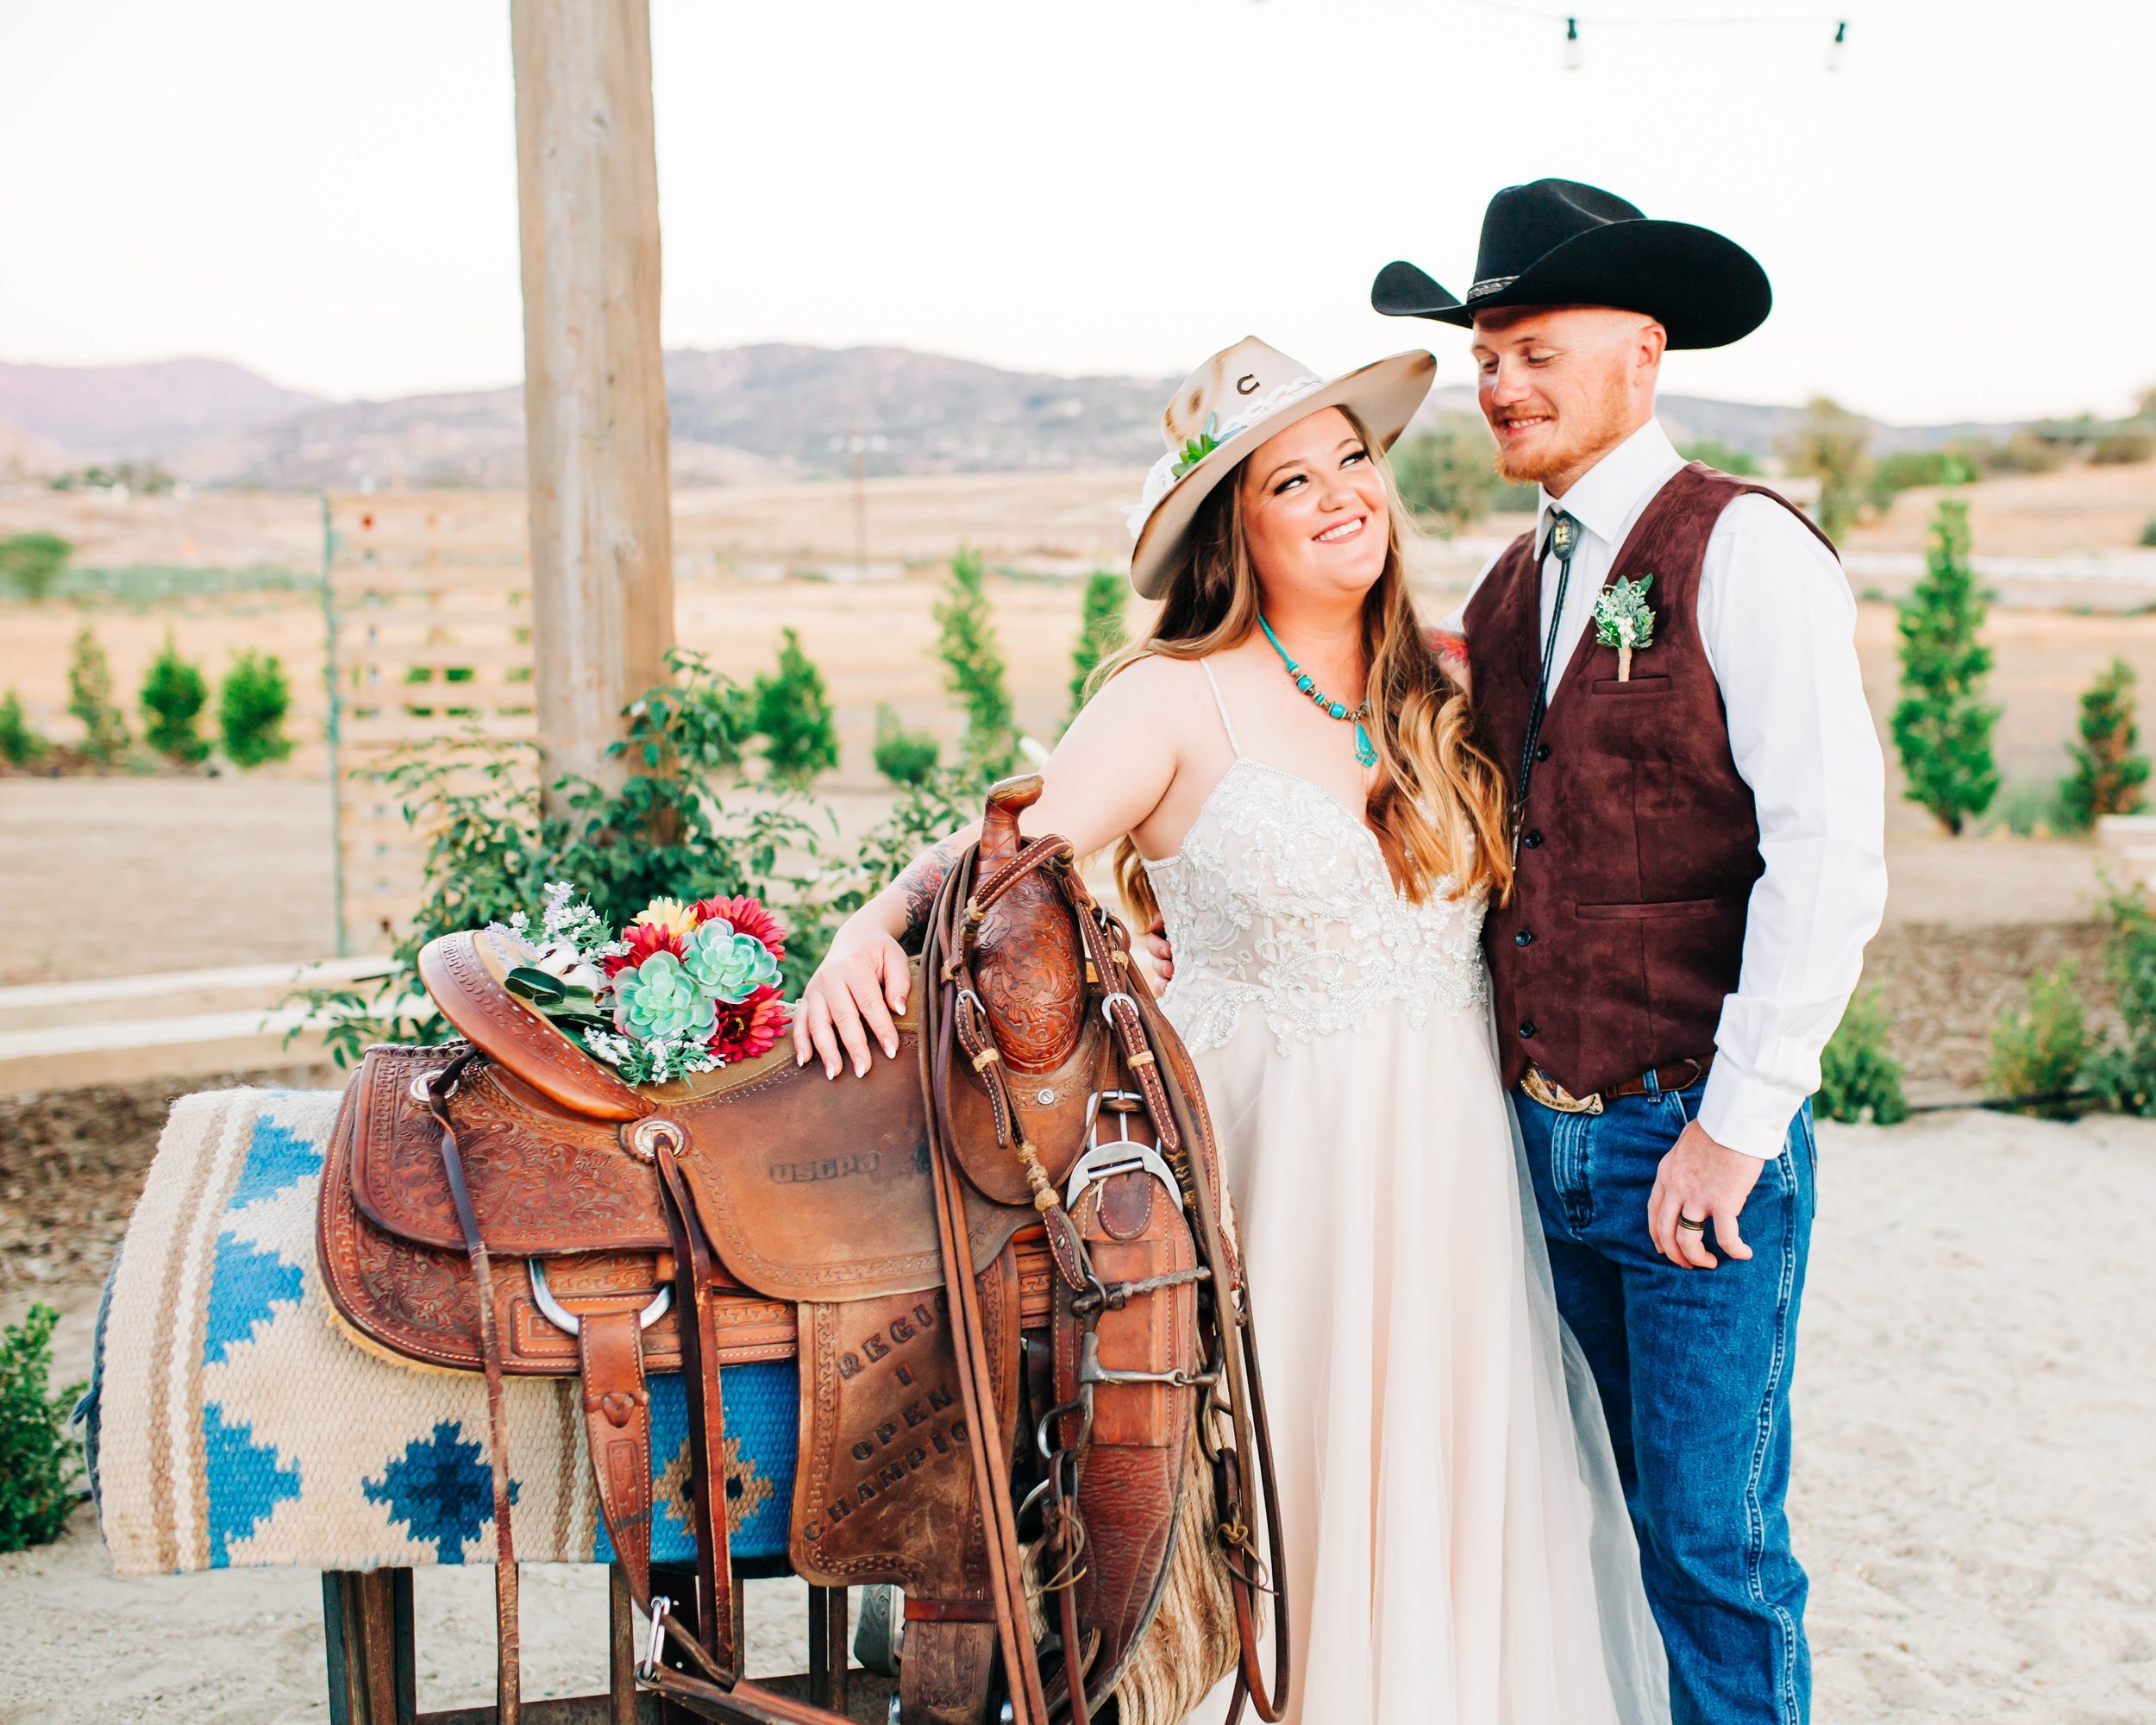 western bride and groom on saddle.jpg